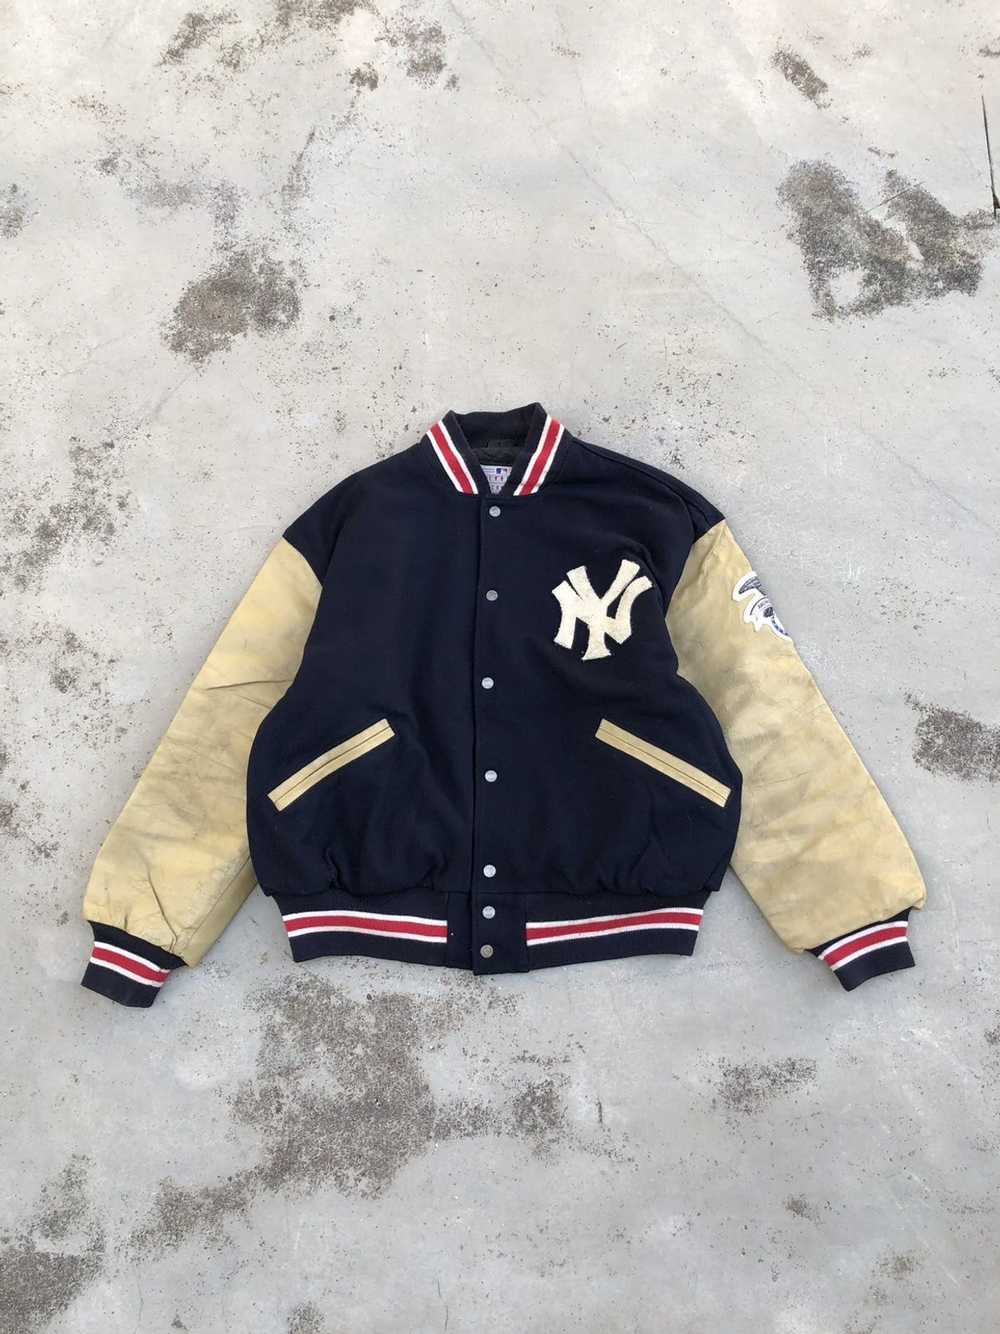 RARE Vintage 90s Distressed New York Yankees Satin Jacket by 